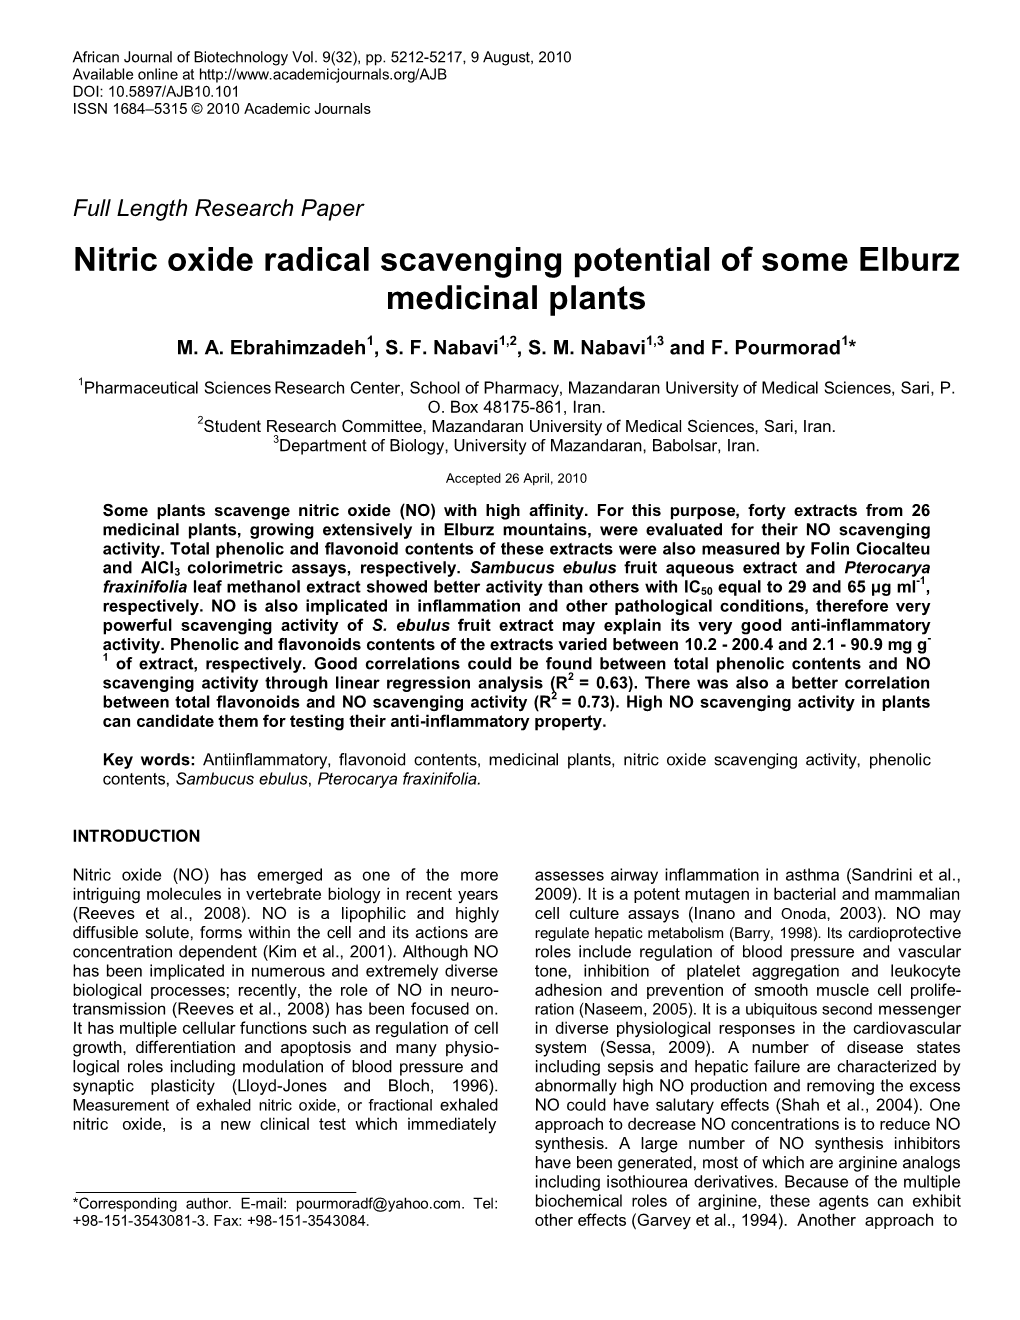 •NO Radical Scavenging Potential of Some Elburz Medical Plants